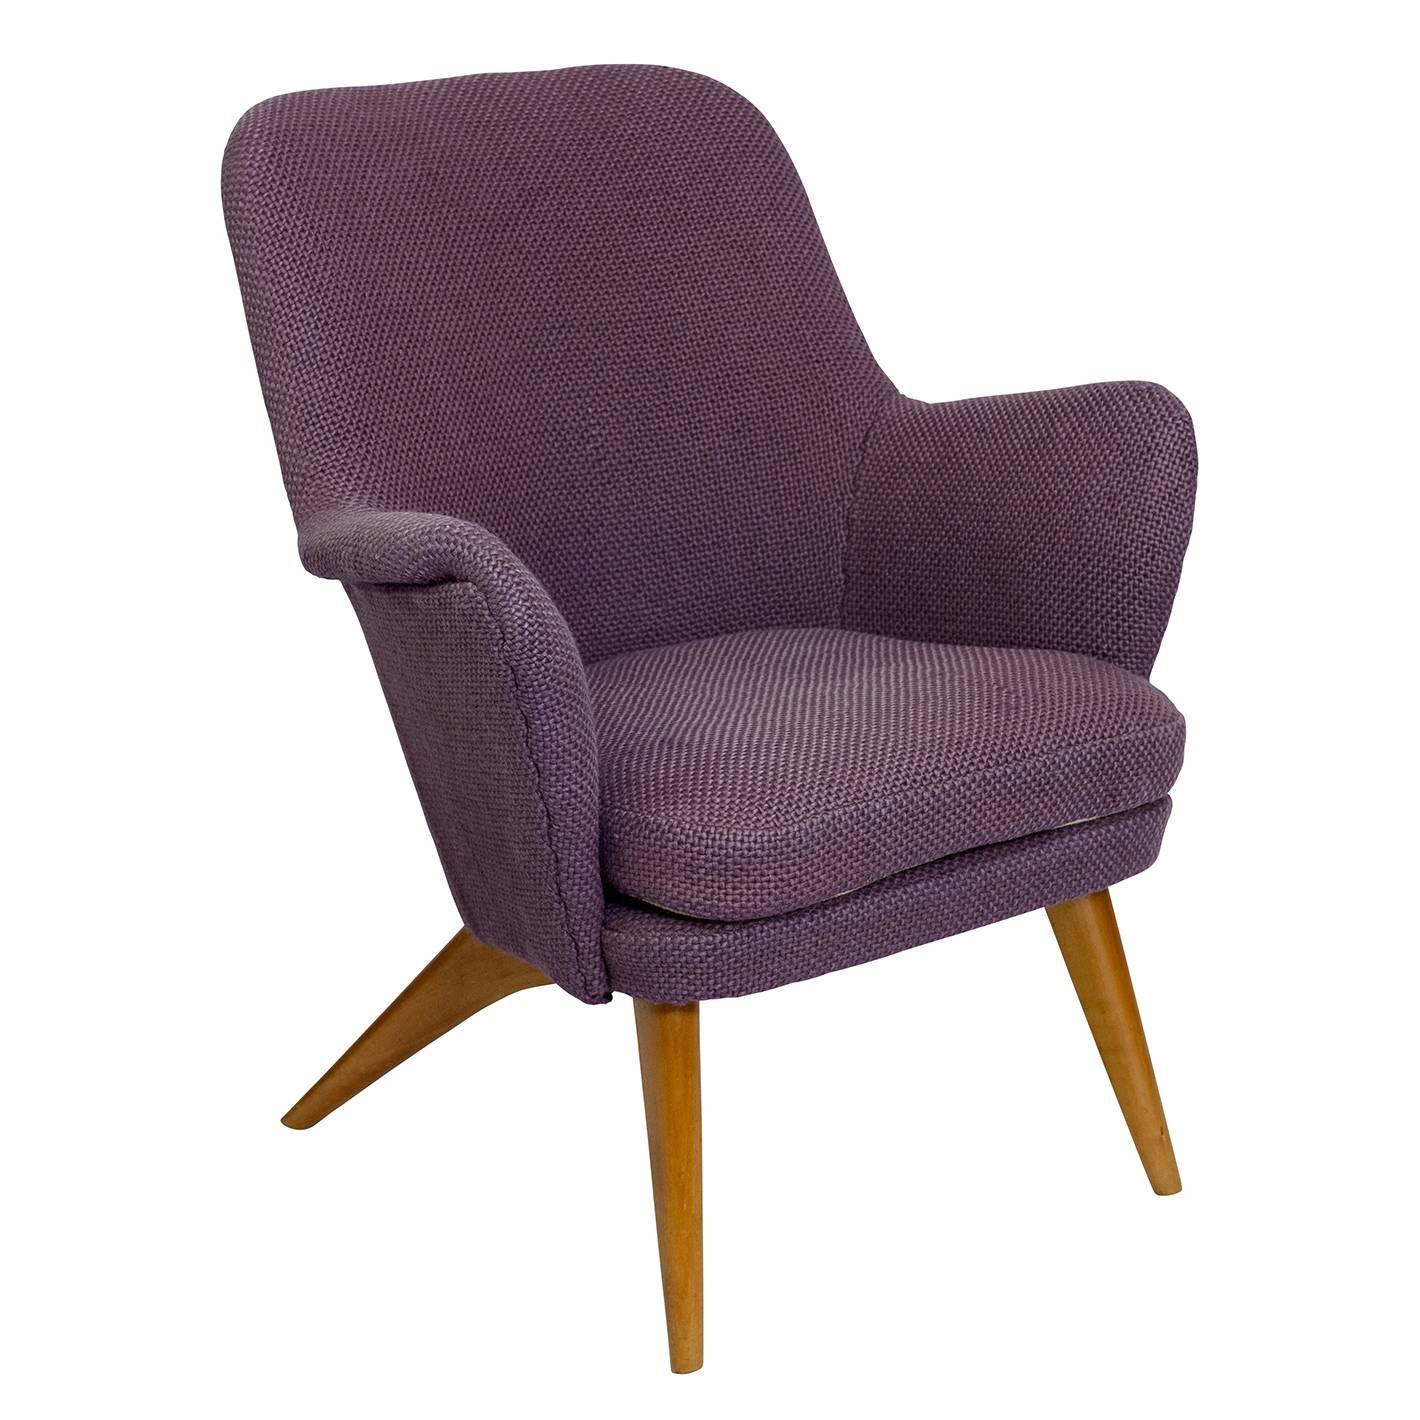 Carl Gustav Hiort af Ornäs Lounge Chair For Sale